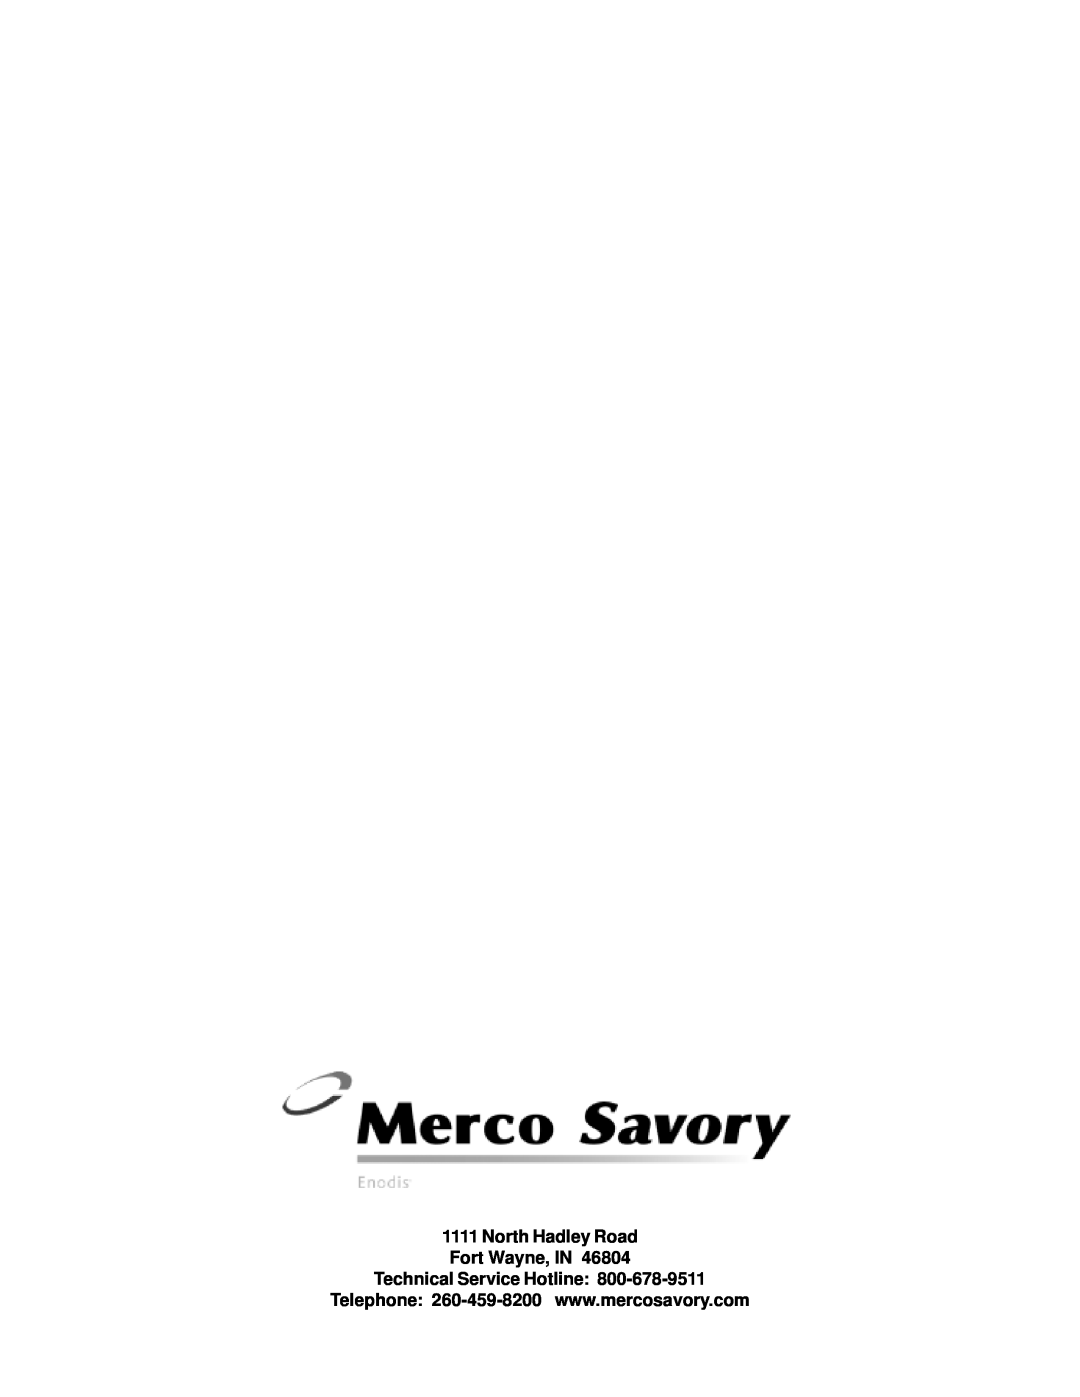 Merco Savory C-40 manual North Hadley Road Fort Wayne, IN, Technical Service Hotline 